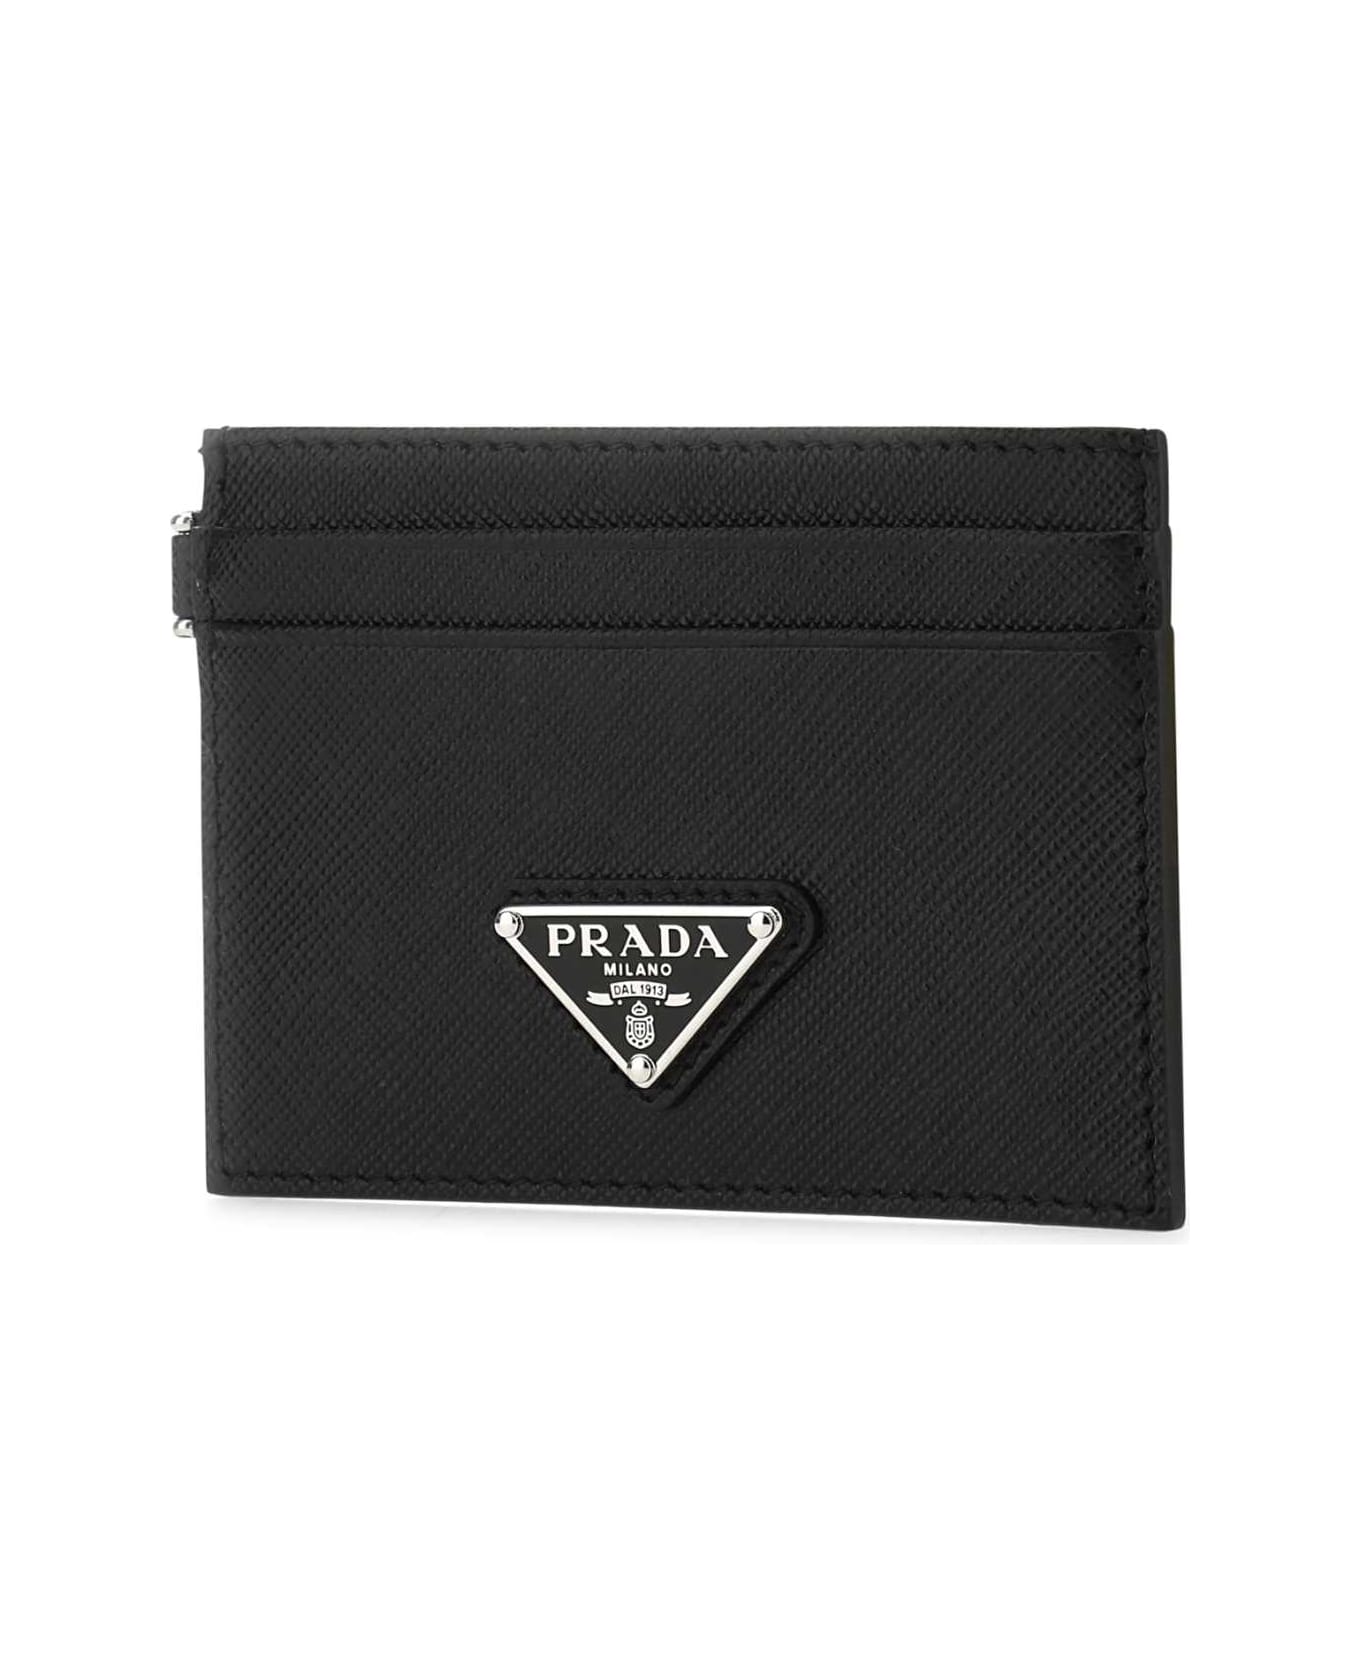 Prada Black Leather Card Holder - F0002